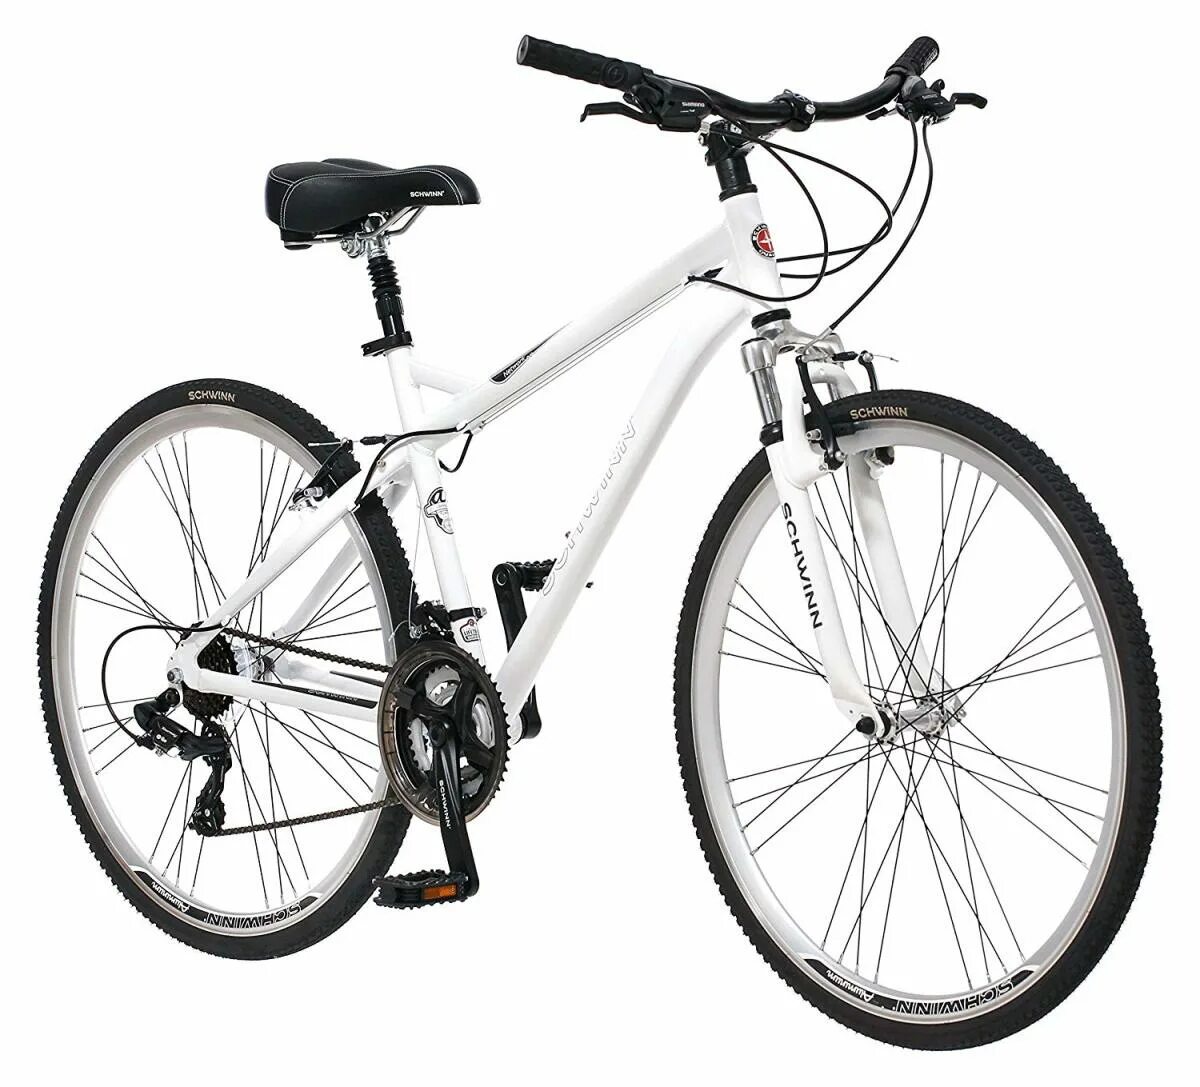 Велосипед Швинн Schwinn мужской. Schwinn велосипед белый. Schwinn discover Hybrid Bike. Швин кросс Кантри велосипед.